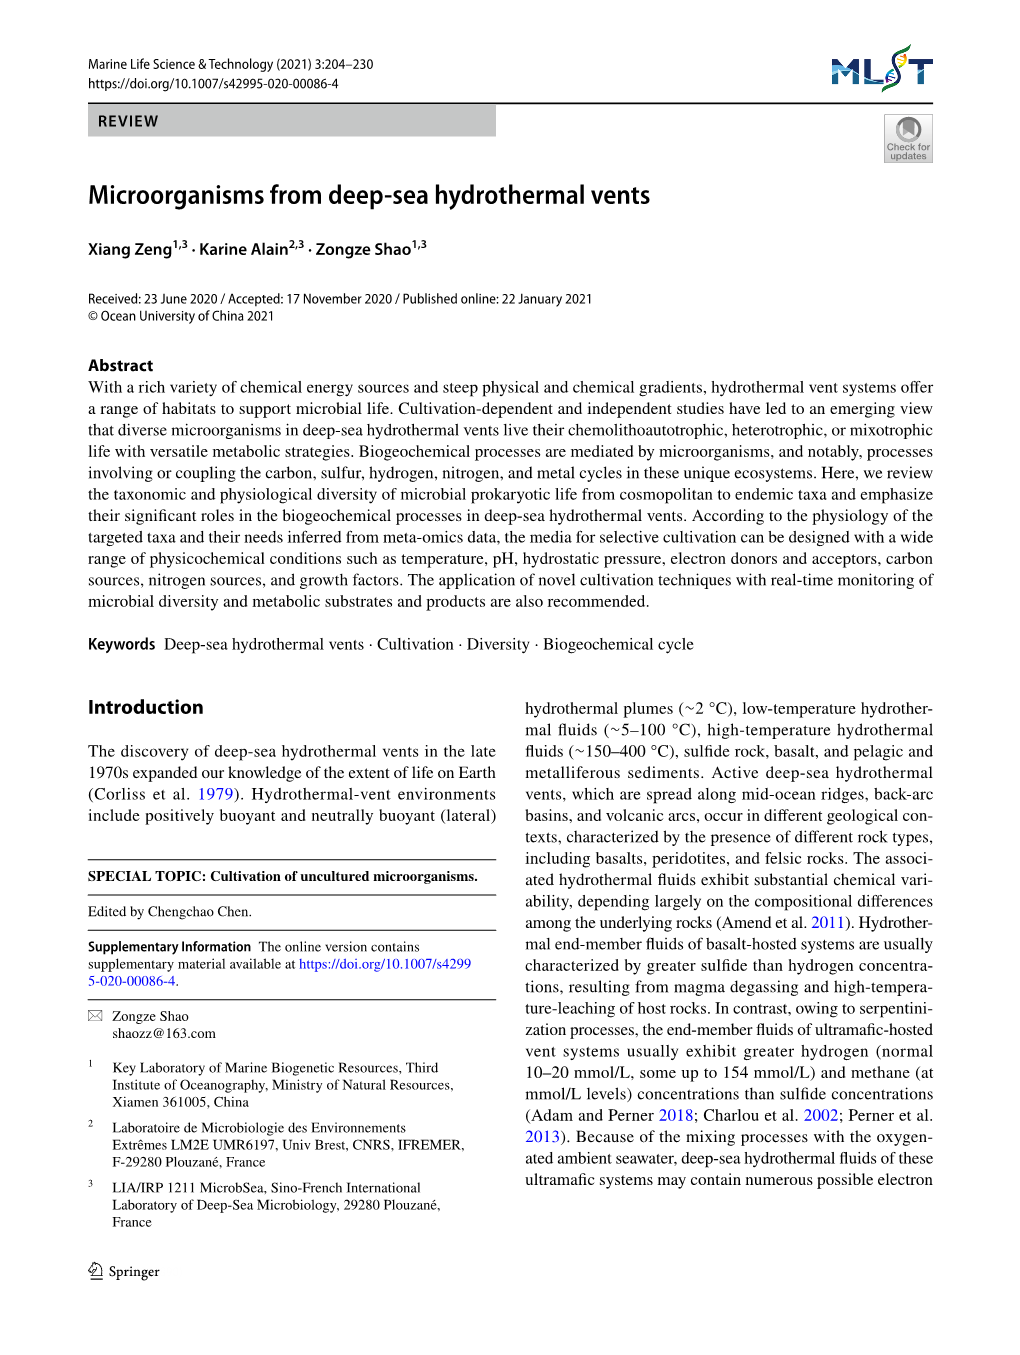 Microorganisms from Deep-Sea Hydrothermal Vents